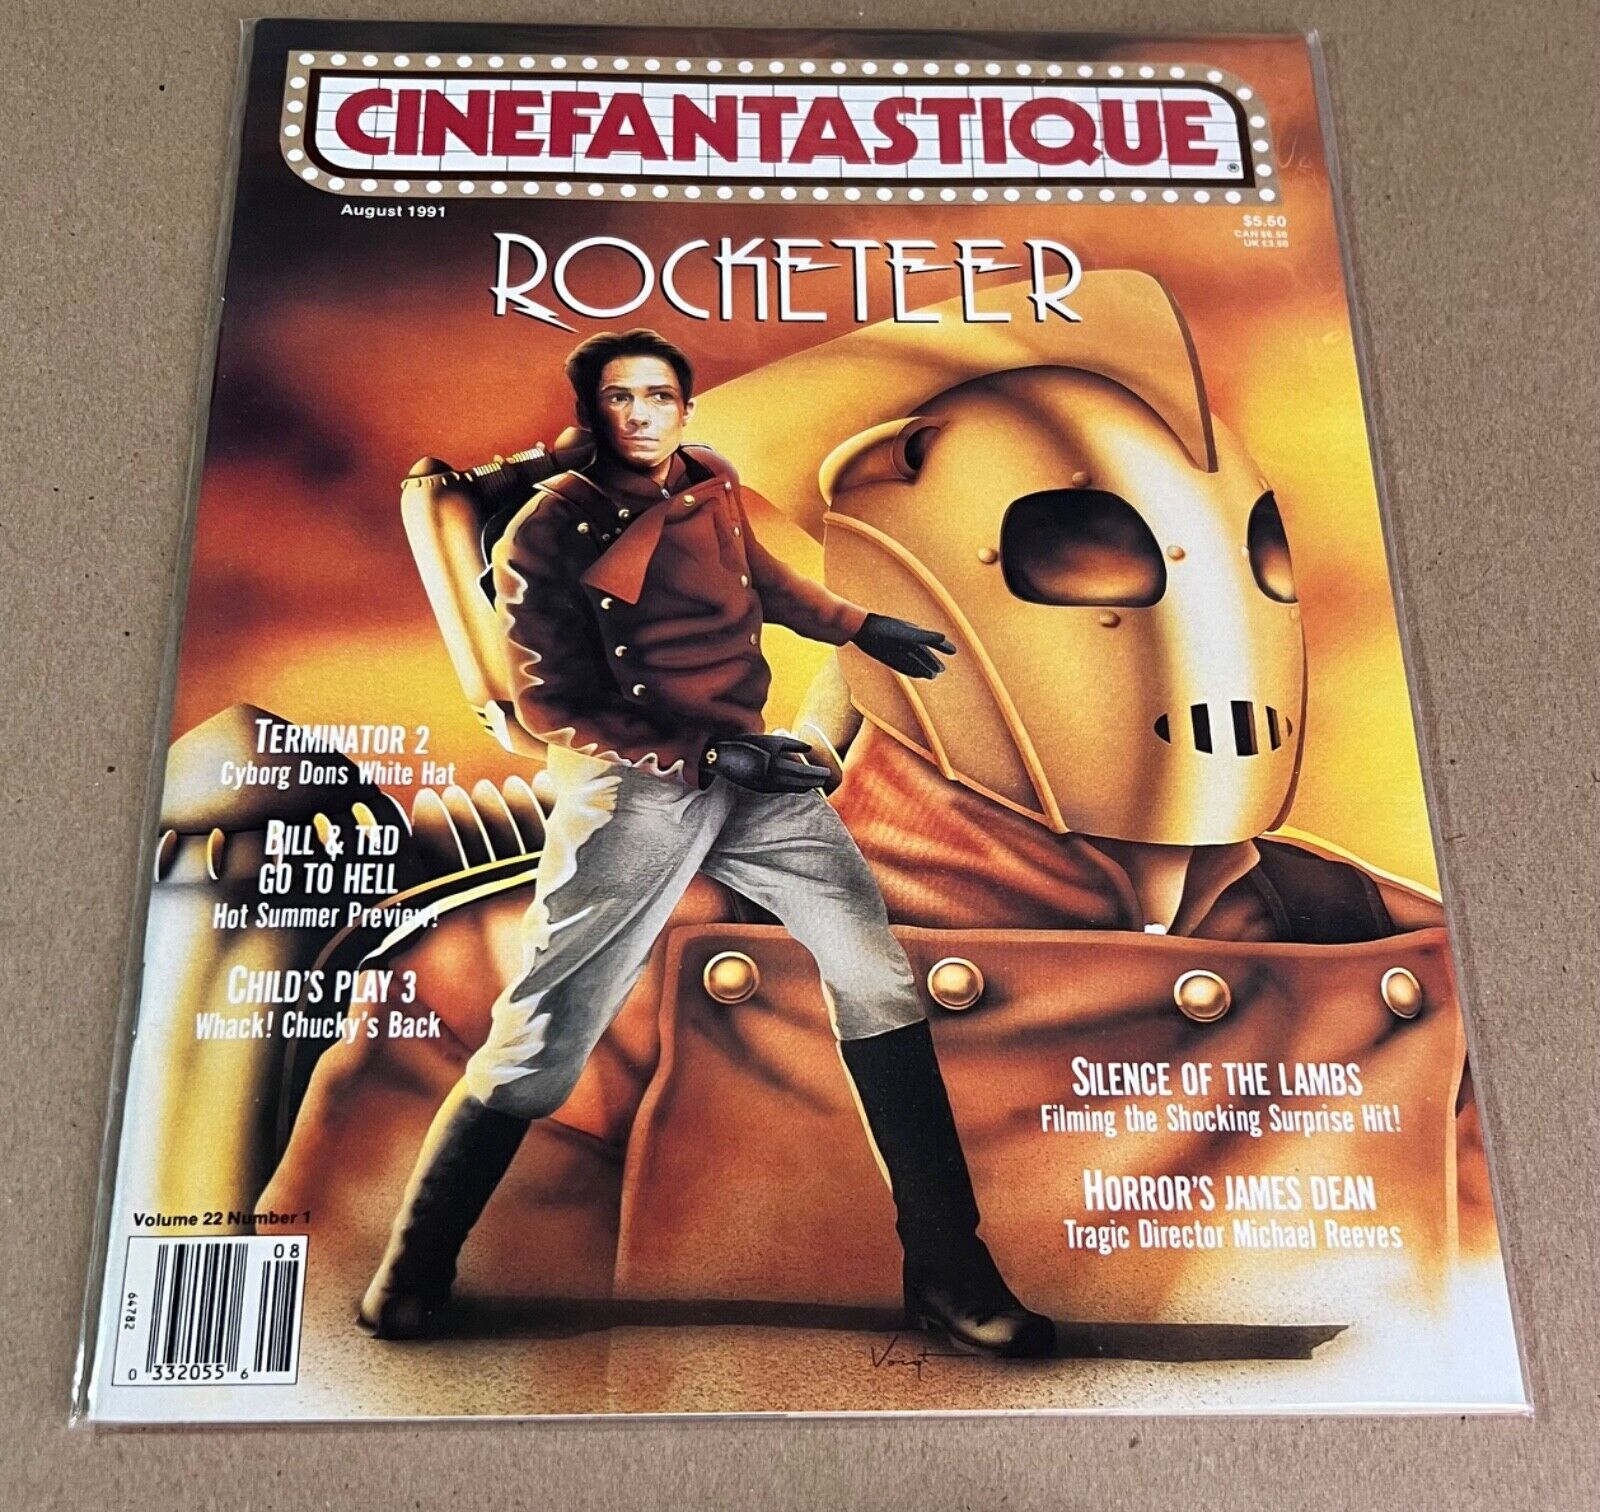 Cinefantastique Magazine / Vol 22 No 1 - The Rocketeer - NEW MINT UNREAD